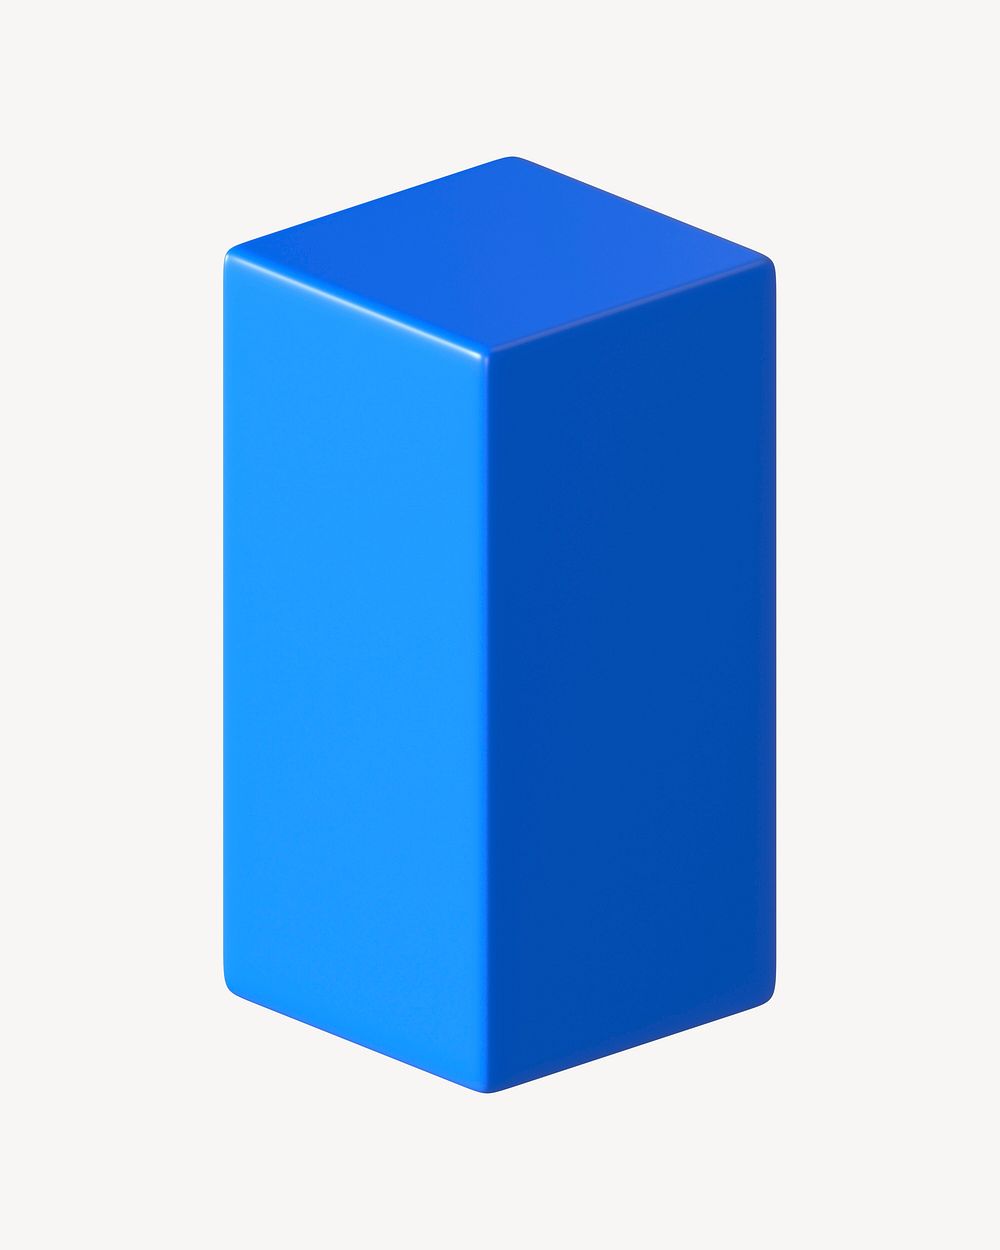 3D blue cuboid, geometric shape